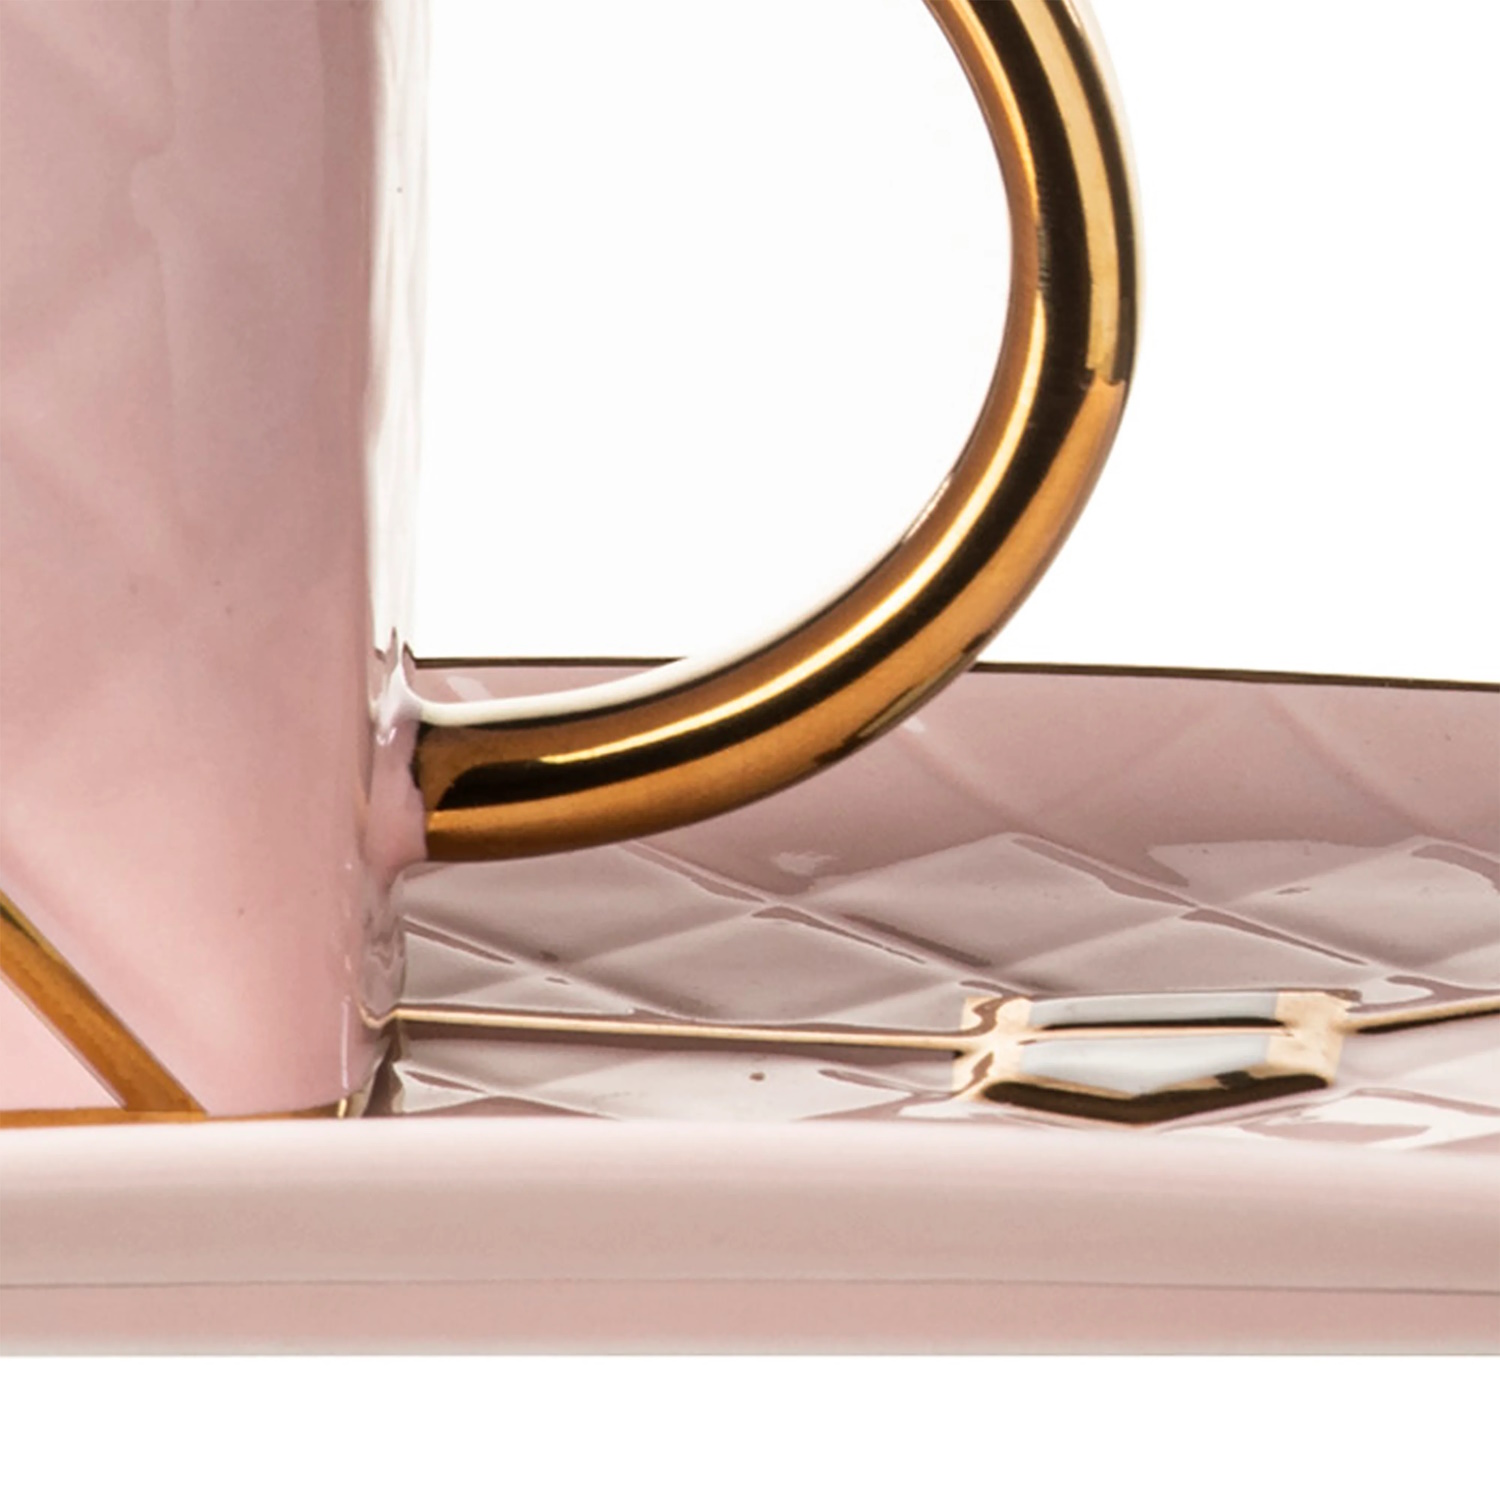 Ashdene Designers Delight Mug & Plate Set - Pale Pink